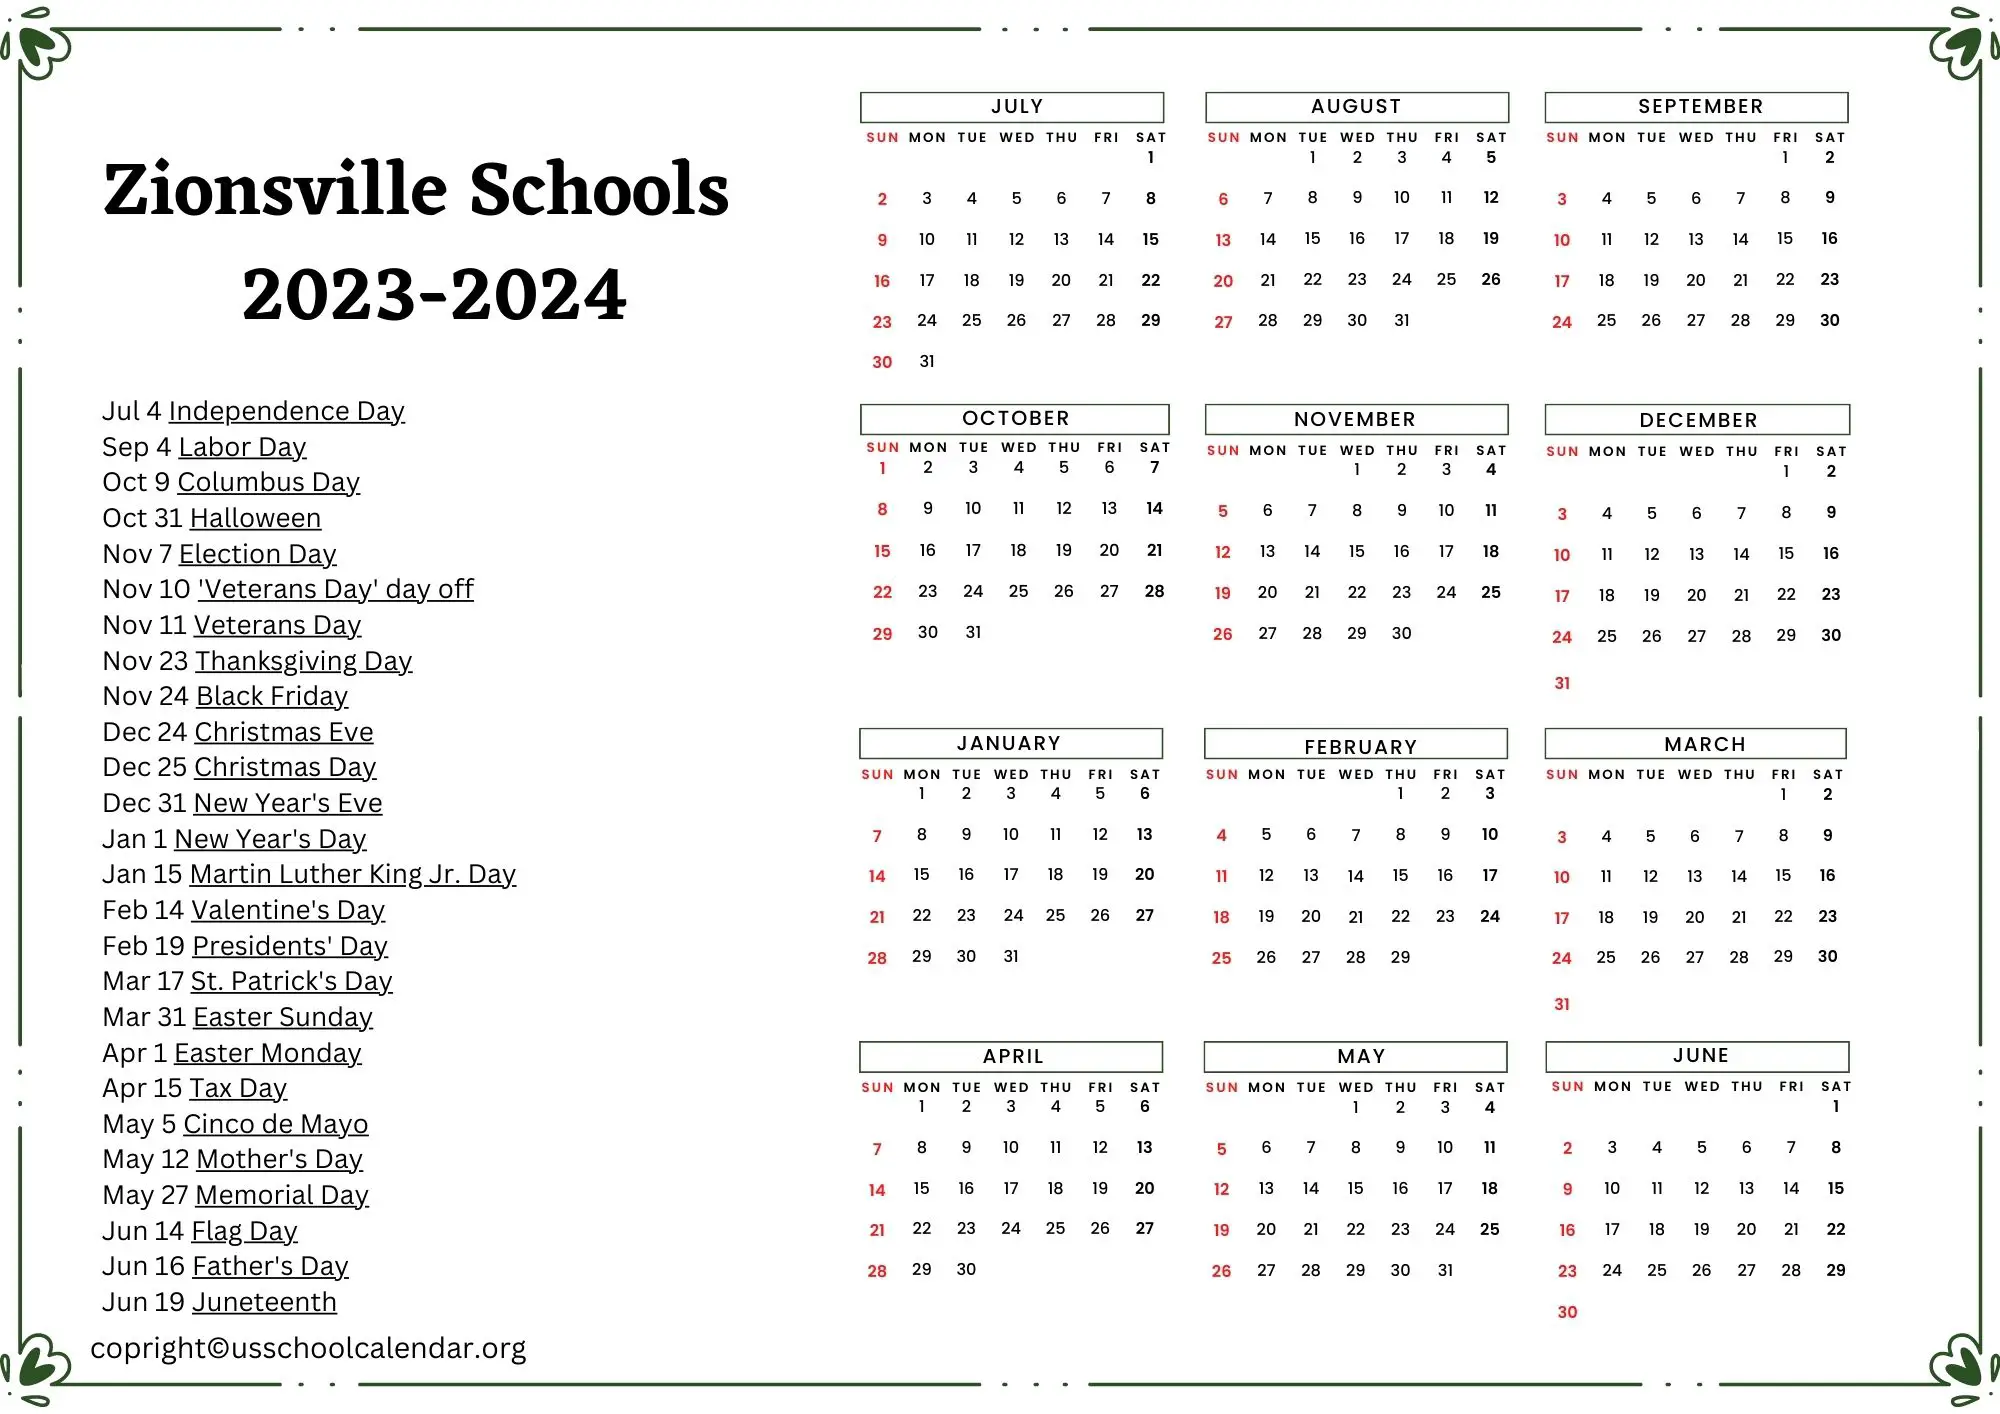 Zionsville Schools Calendar with Holidays 20232024